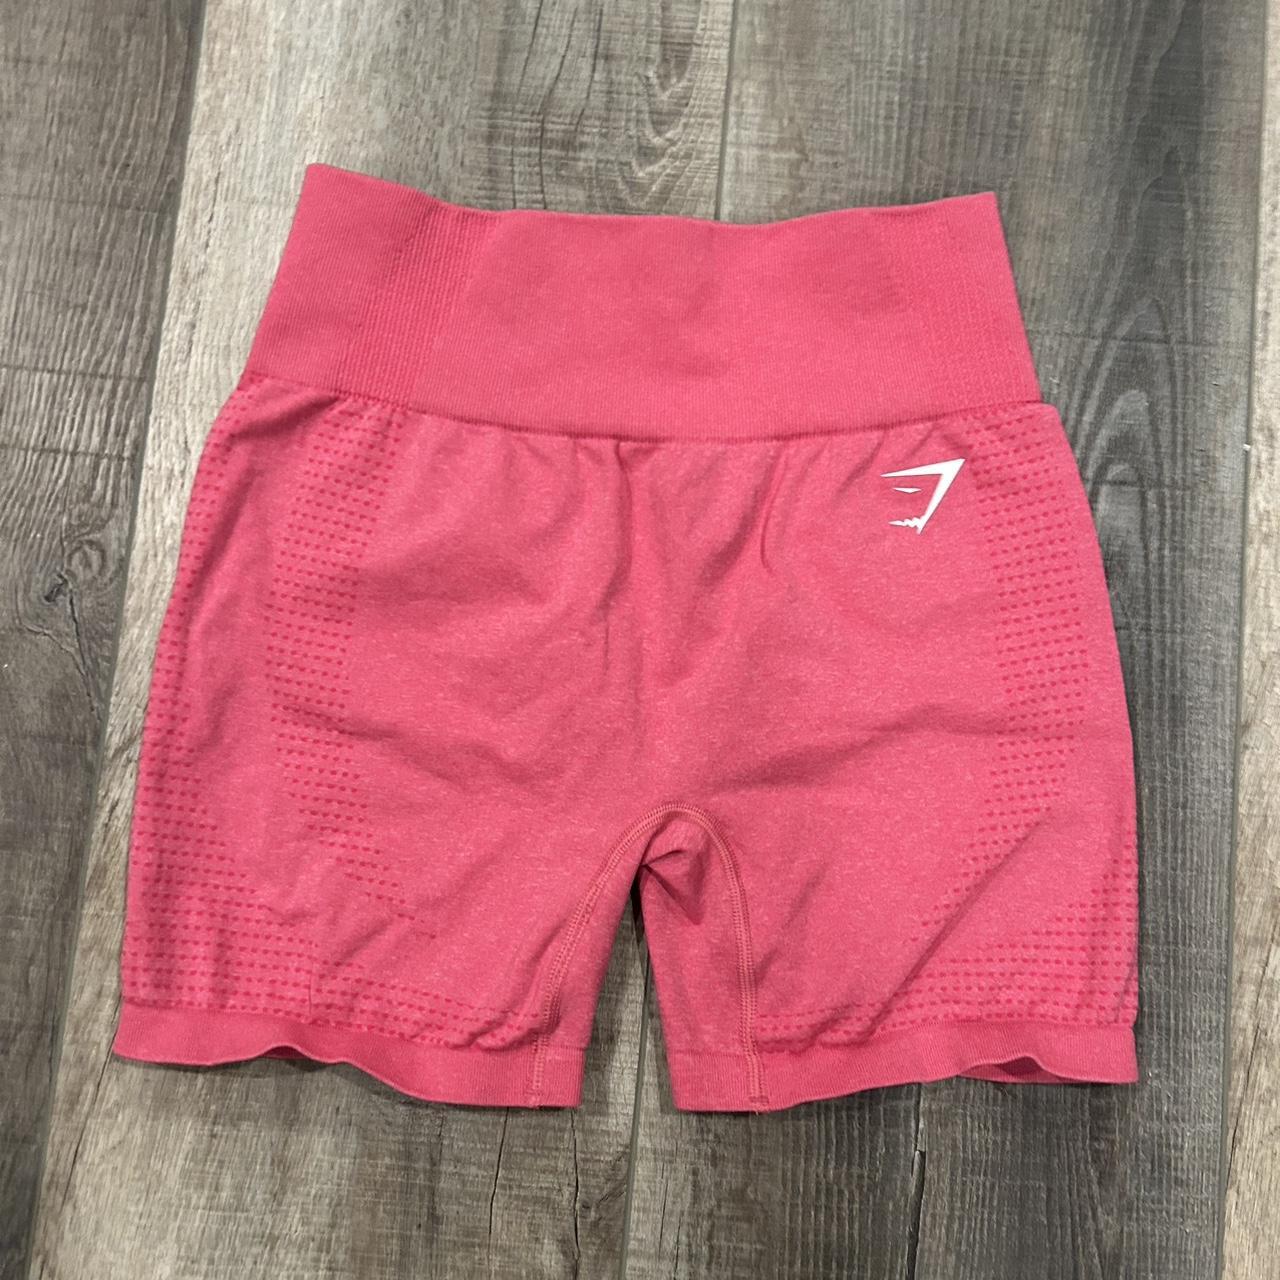 Gymshark shorts. Size medium. Only worn once. - Depop